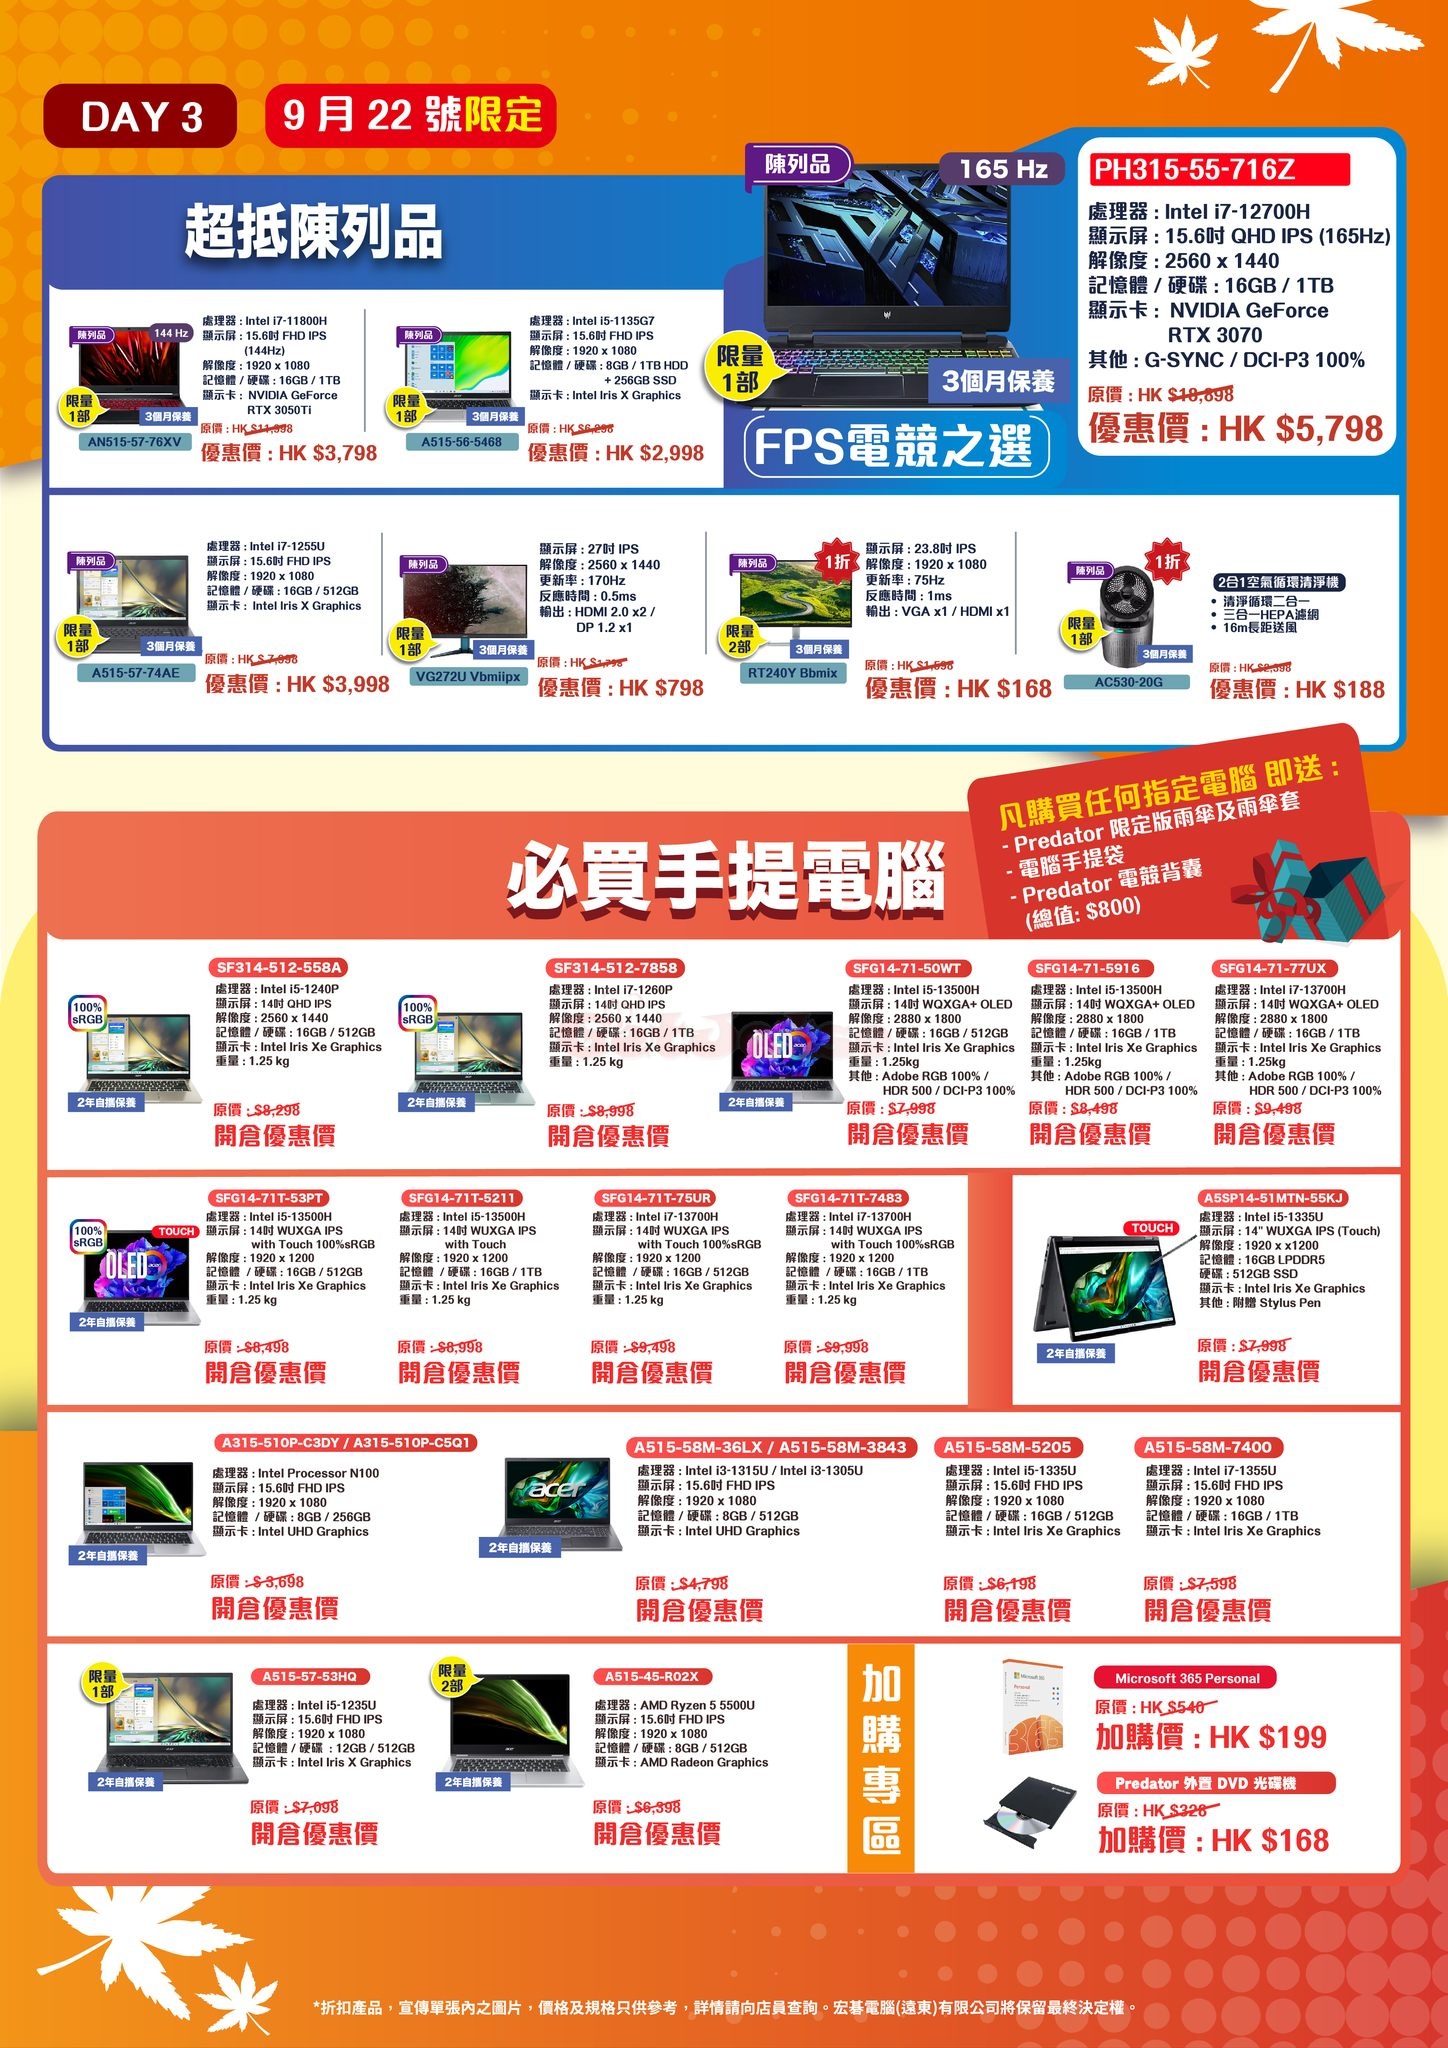 Acer 全民開倉優惠(至23年9月22日)圖片2